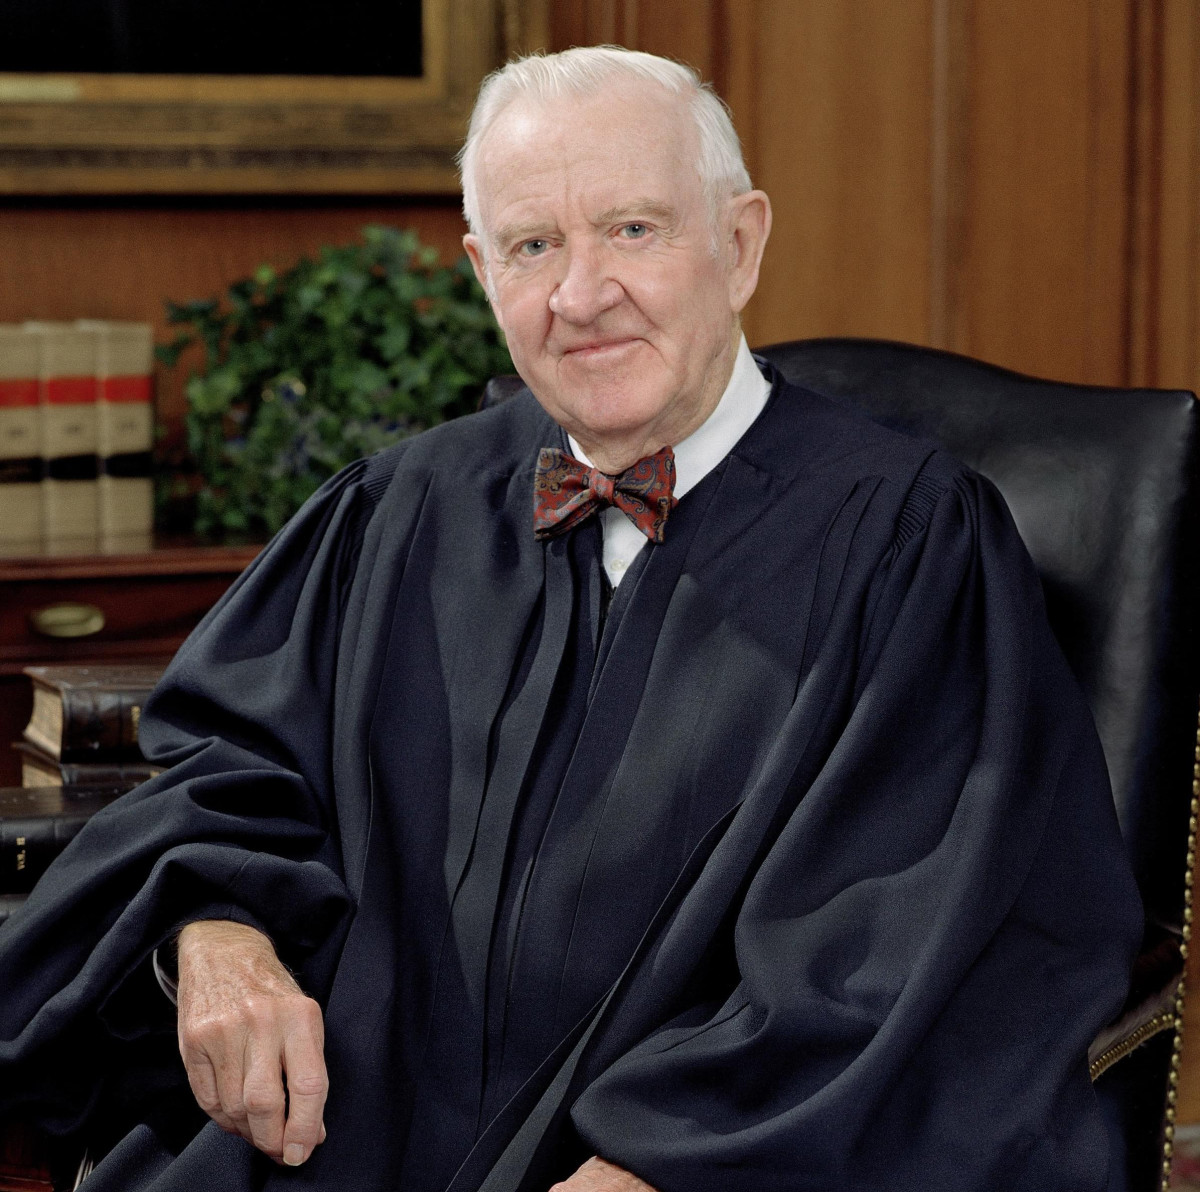 Justice John Paul Stevens